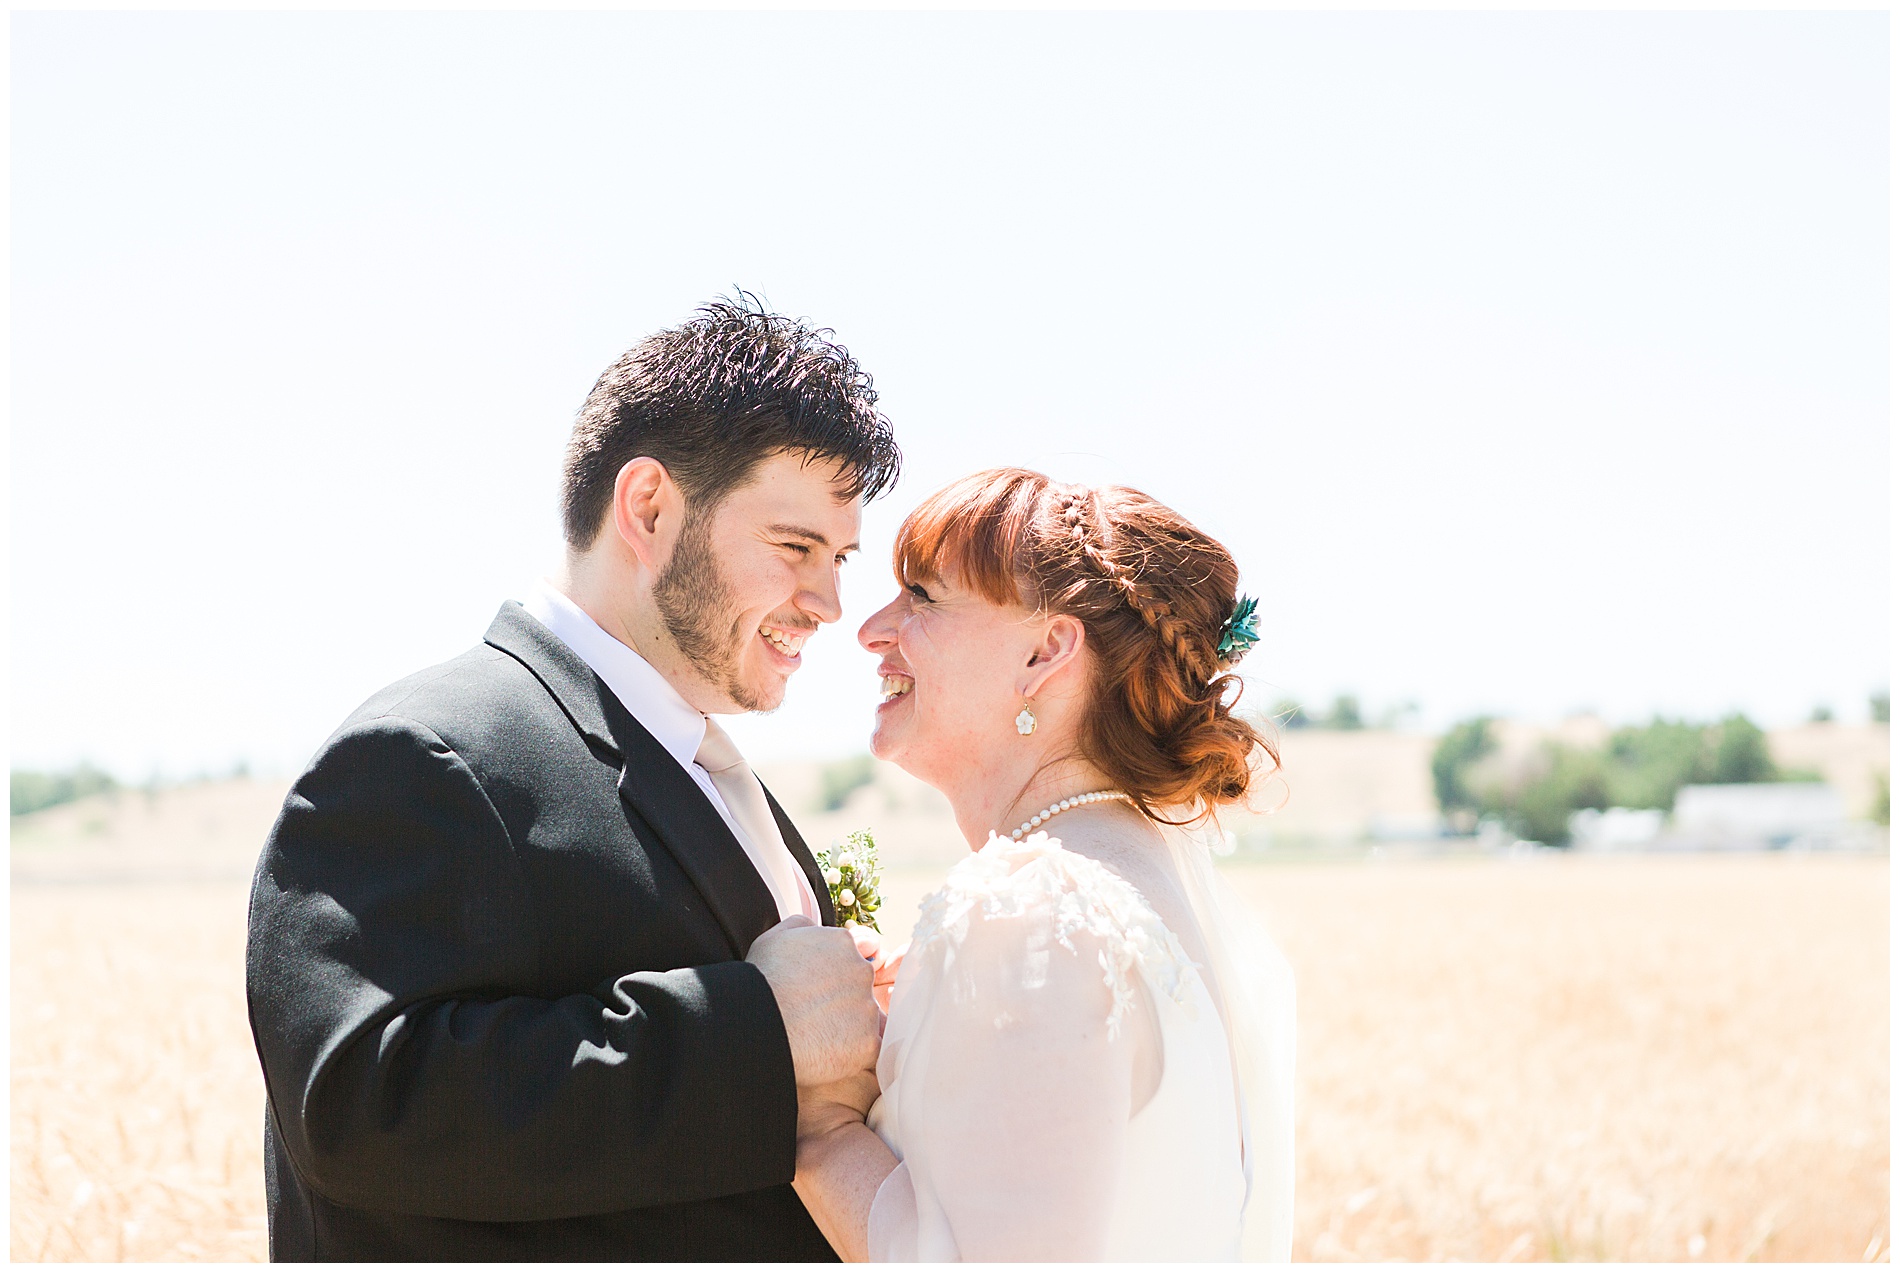 Bride and groom portraits | Idaho wedding photographer | Robin Wheeler Photography